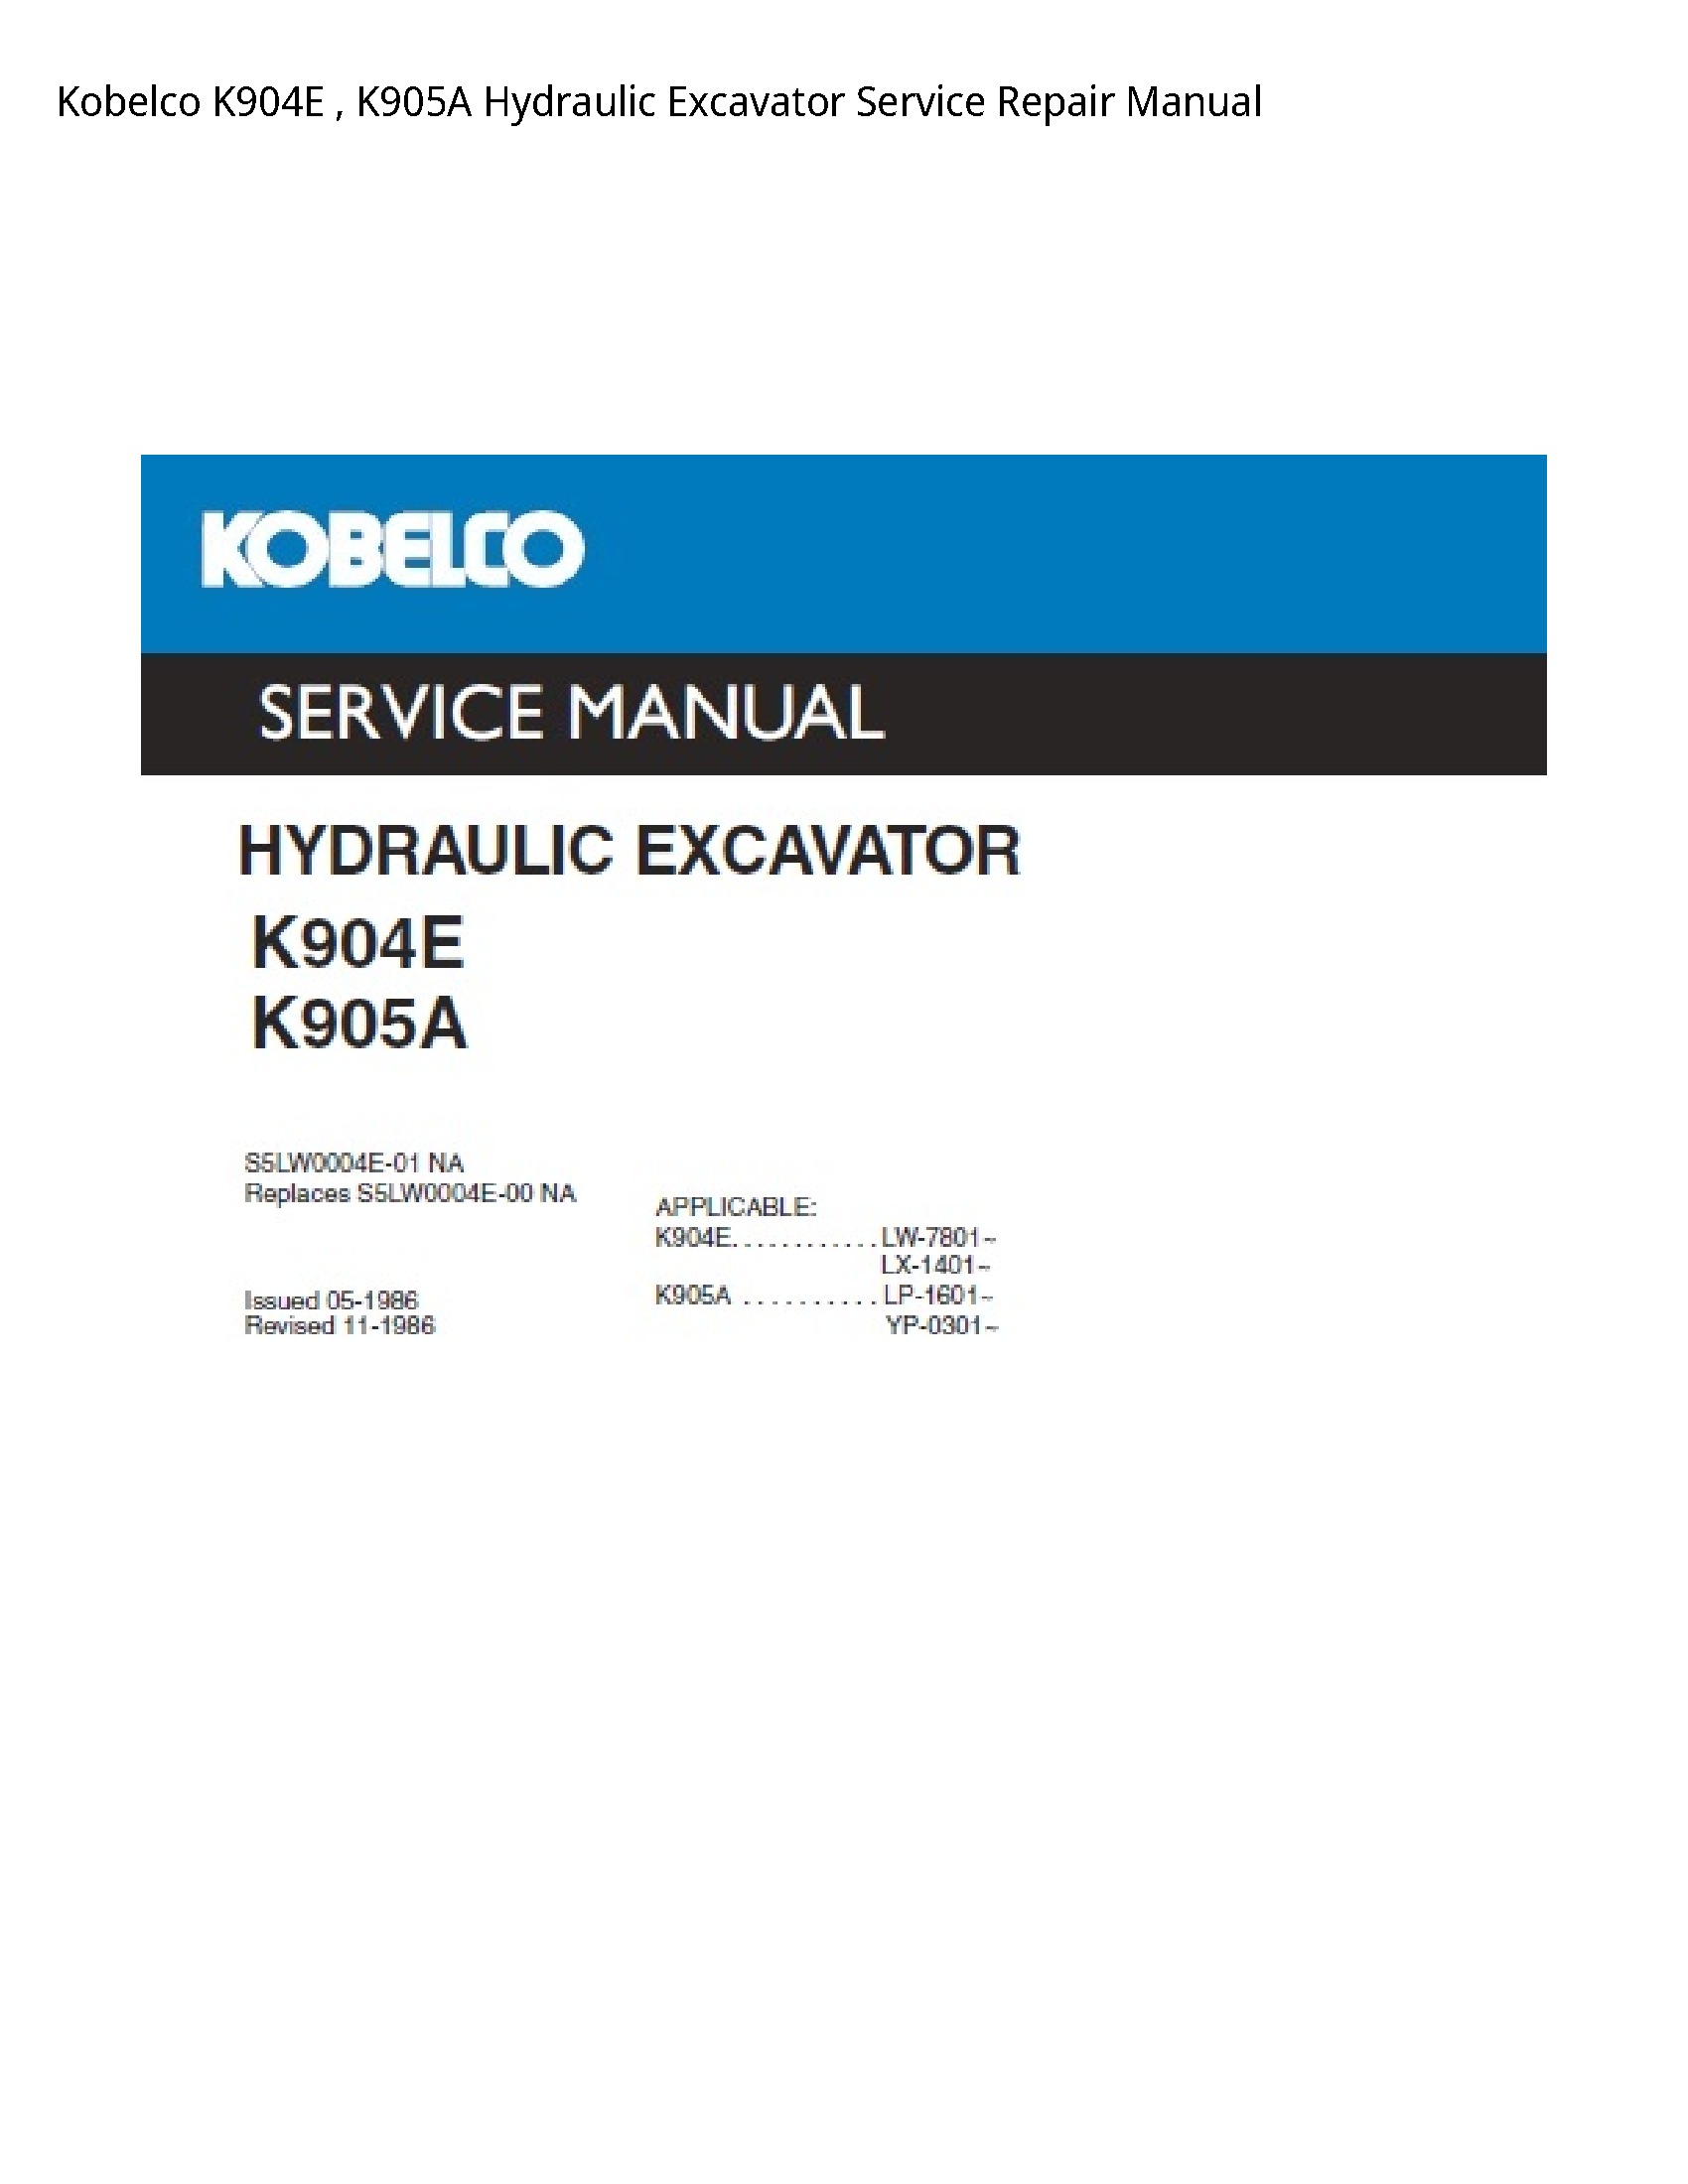 Kobelco K904E Hydraulic Excavator manual